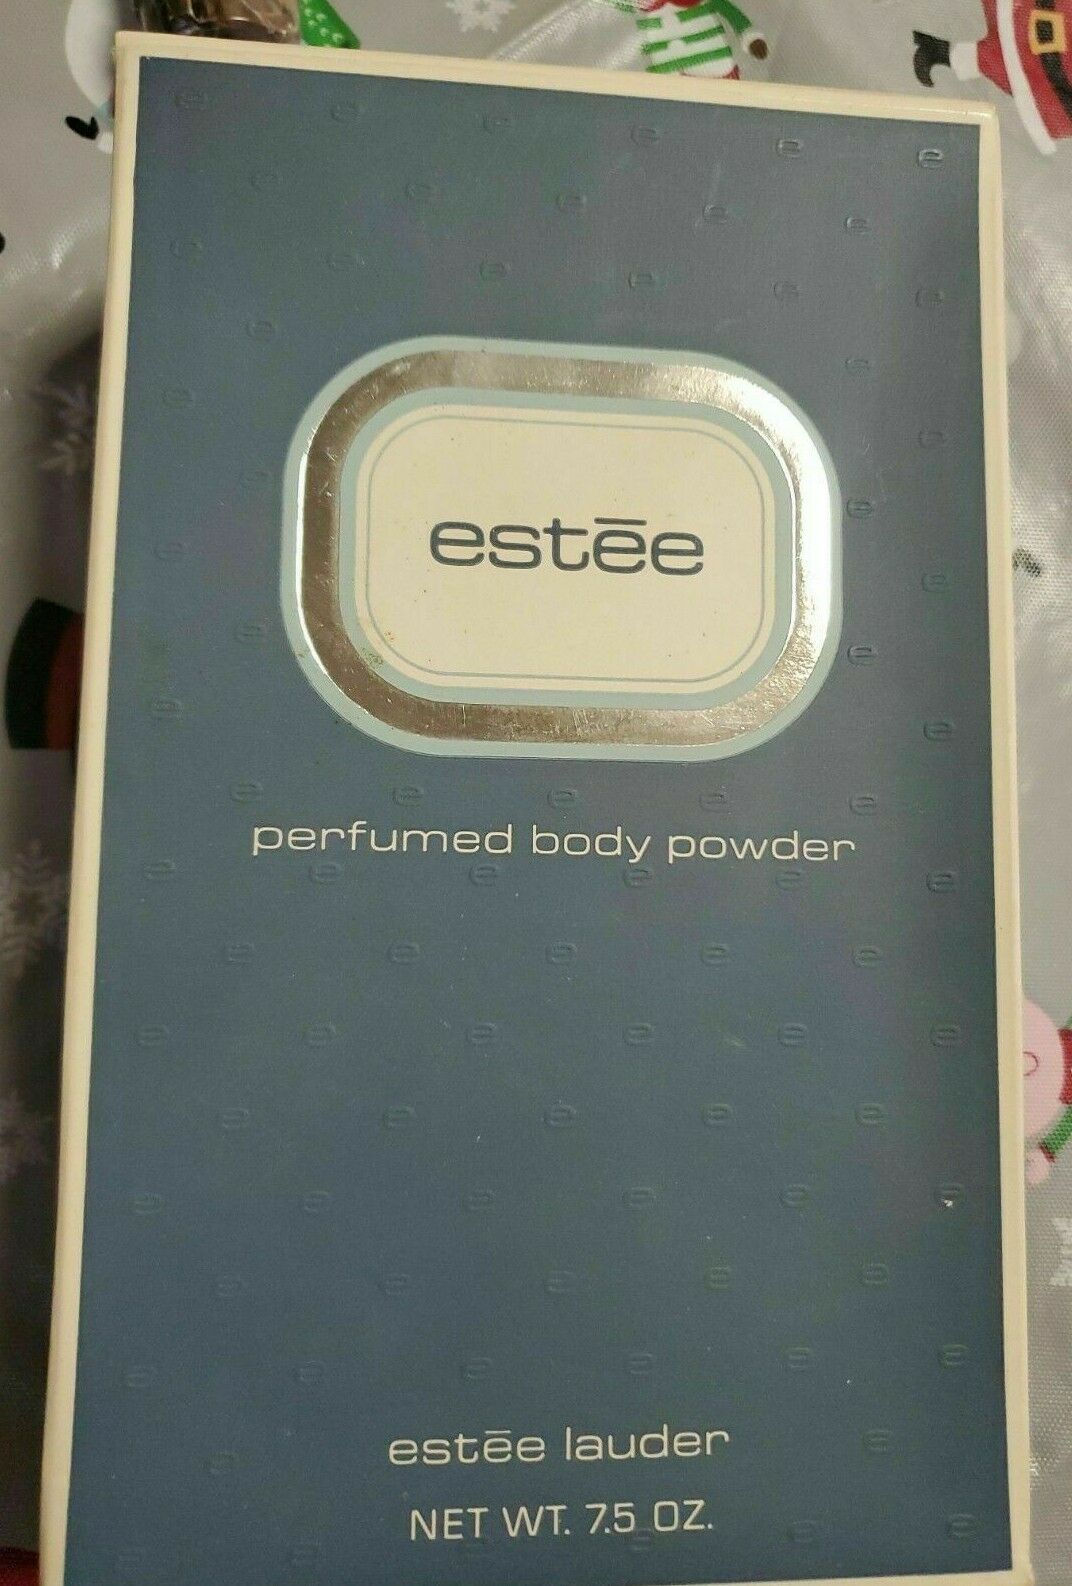 Estee Lauder ESTEE Perfumed Body Powder Dusting Talc 7.5oz 225g HUGE Rare NIB - $239.50